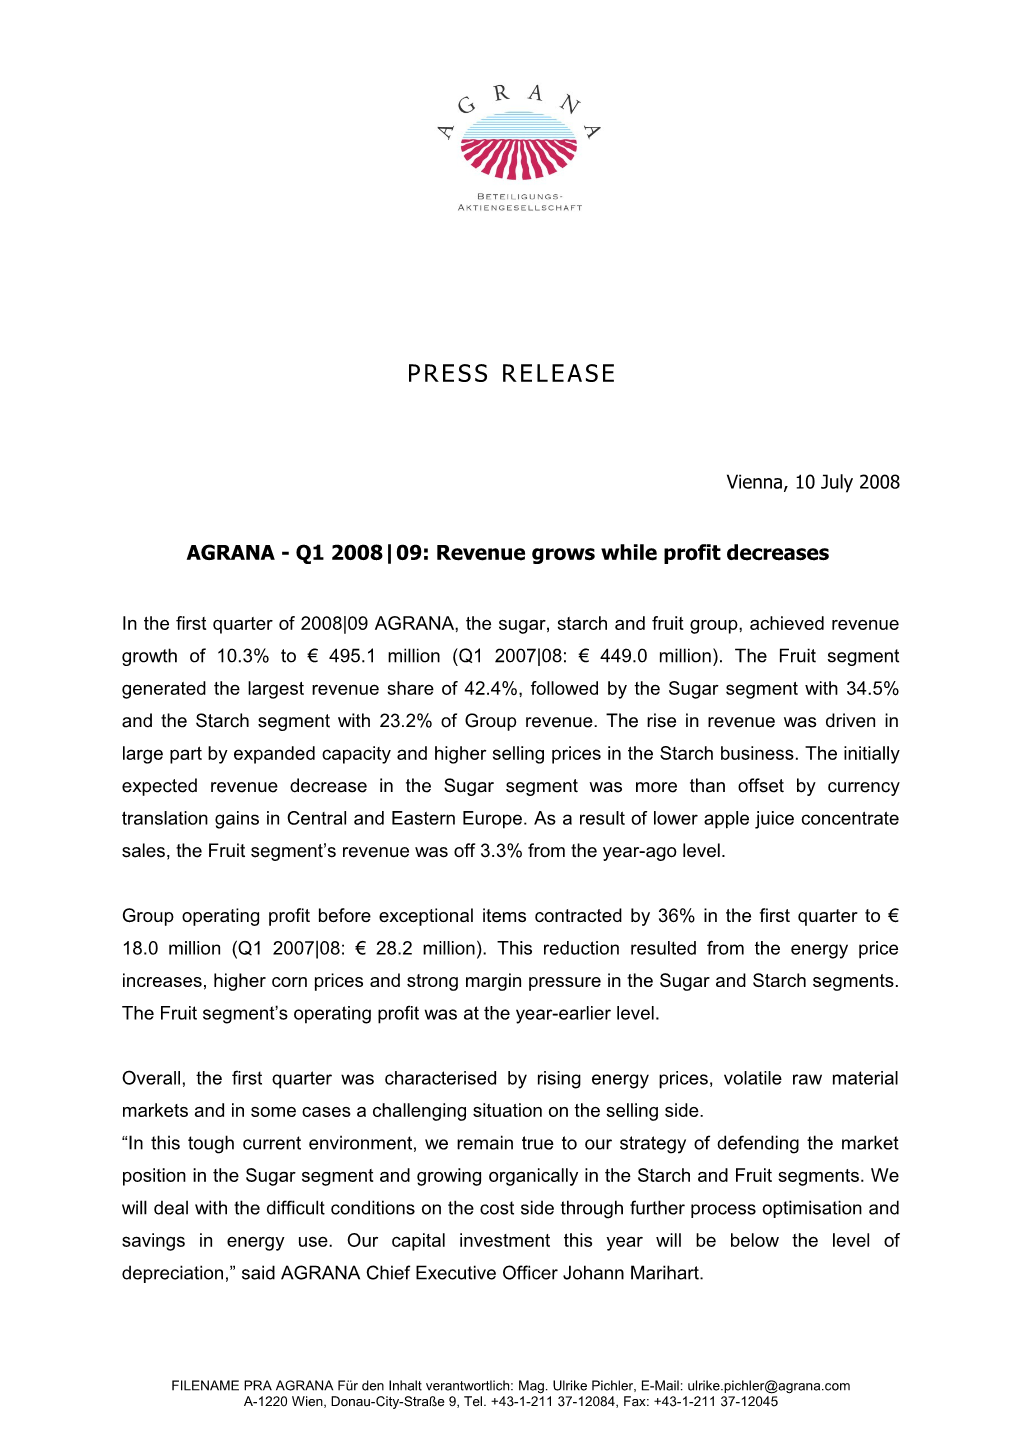 AGRANA - Q1 2008 09: Revenue Grows While Profit Decreases